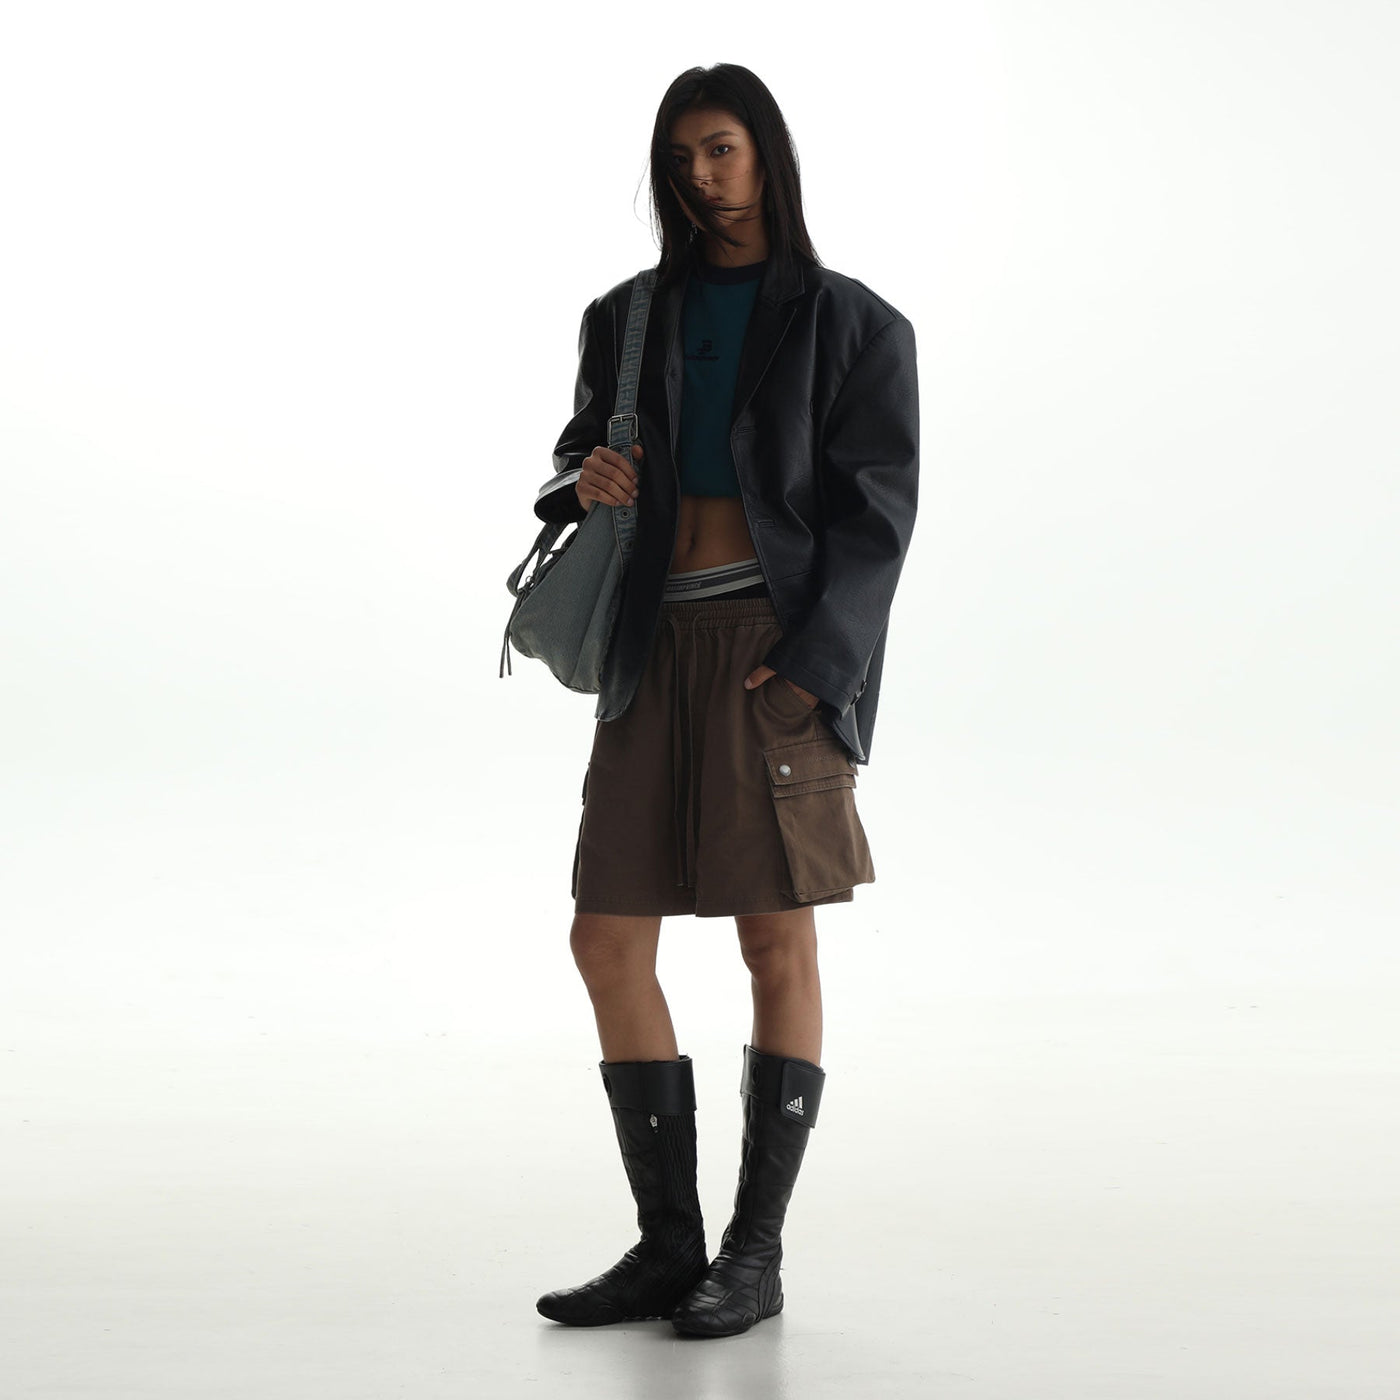 Tie Waist Double Pocket Cargo Shorts Korean Street Fashion Shorts By Mason Prince Shop Online at OH Vault